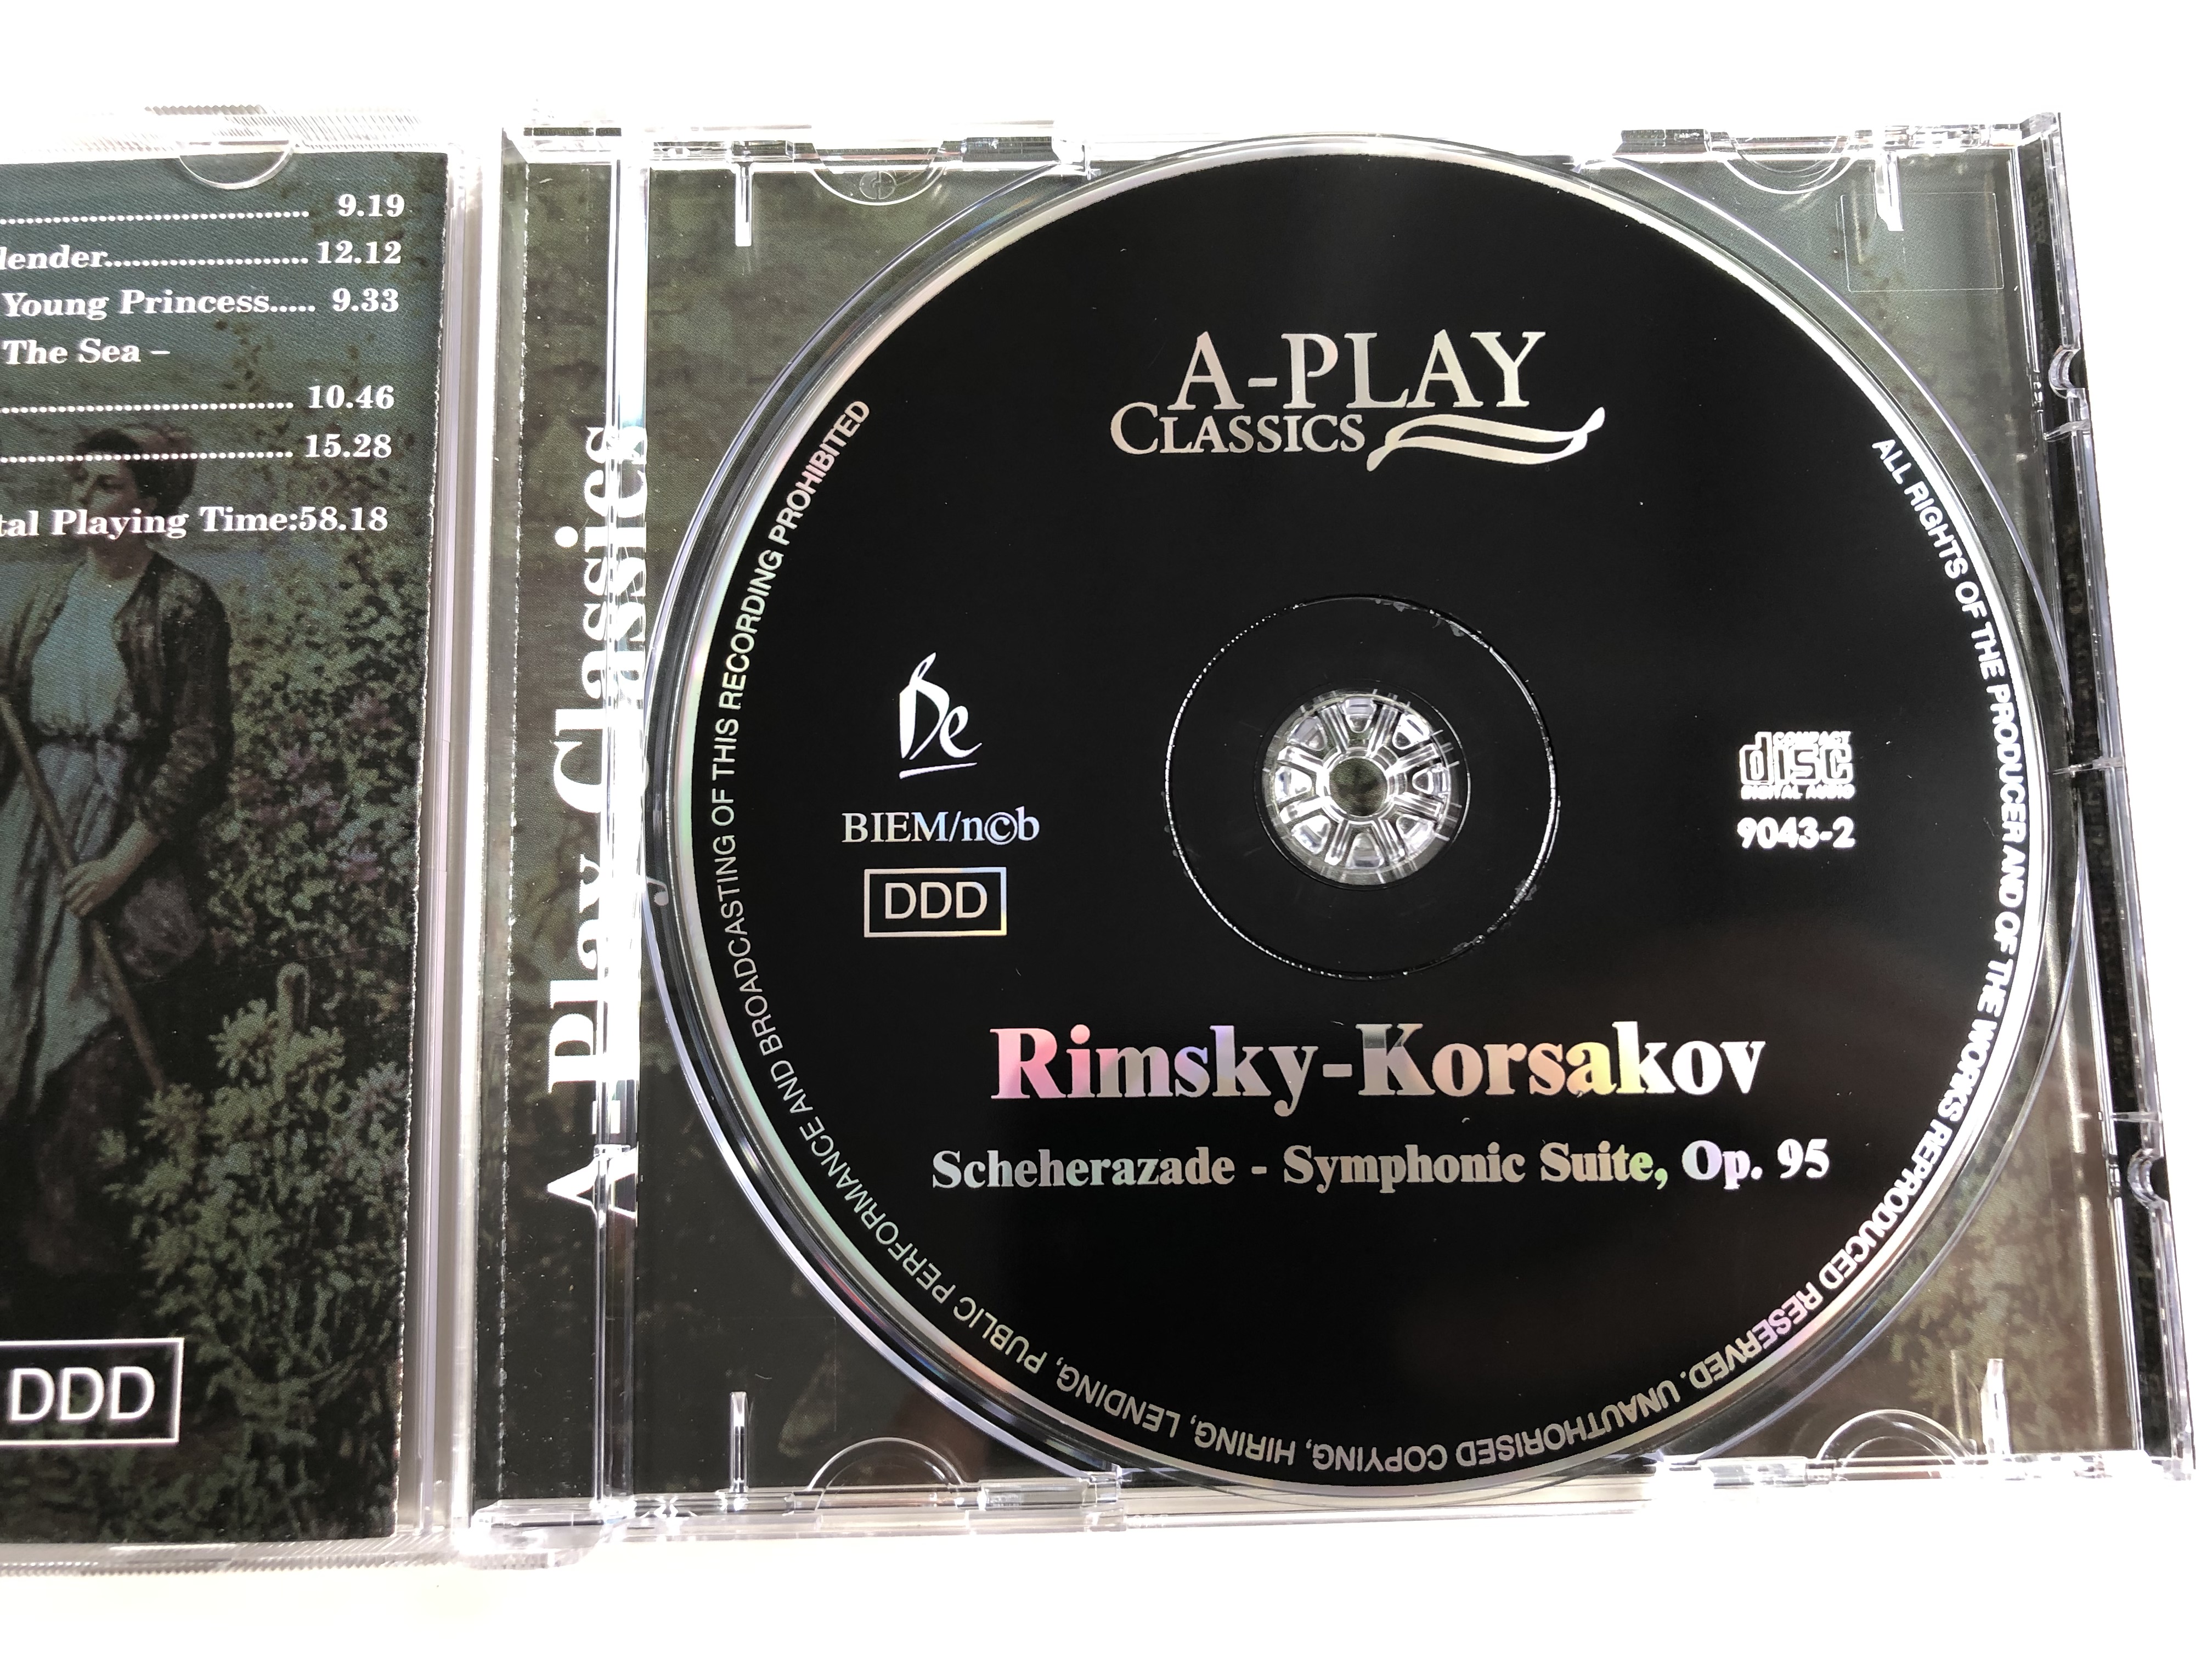 rimsky-korsakov-scheherazade-symphonic-suite-op.-95-u.s.s.r-state-symphony-orchestra-conducted-alexander-tcherkov-a-play-classics-audio-cd-9043-2-4-.jpg